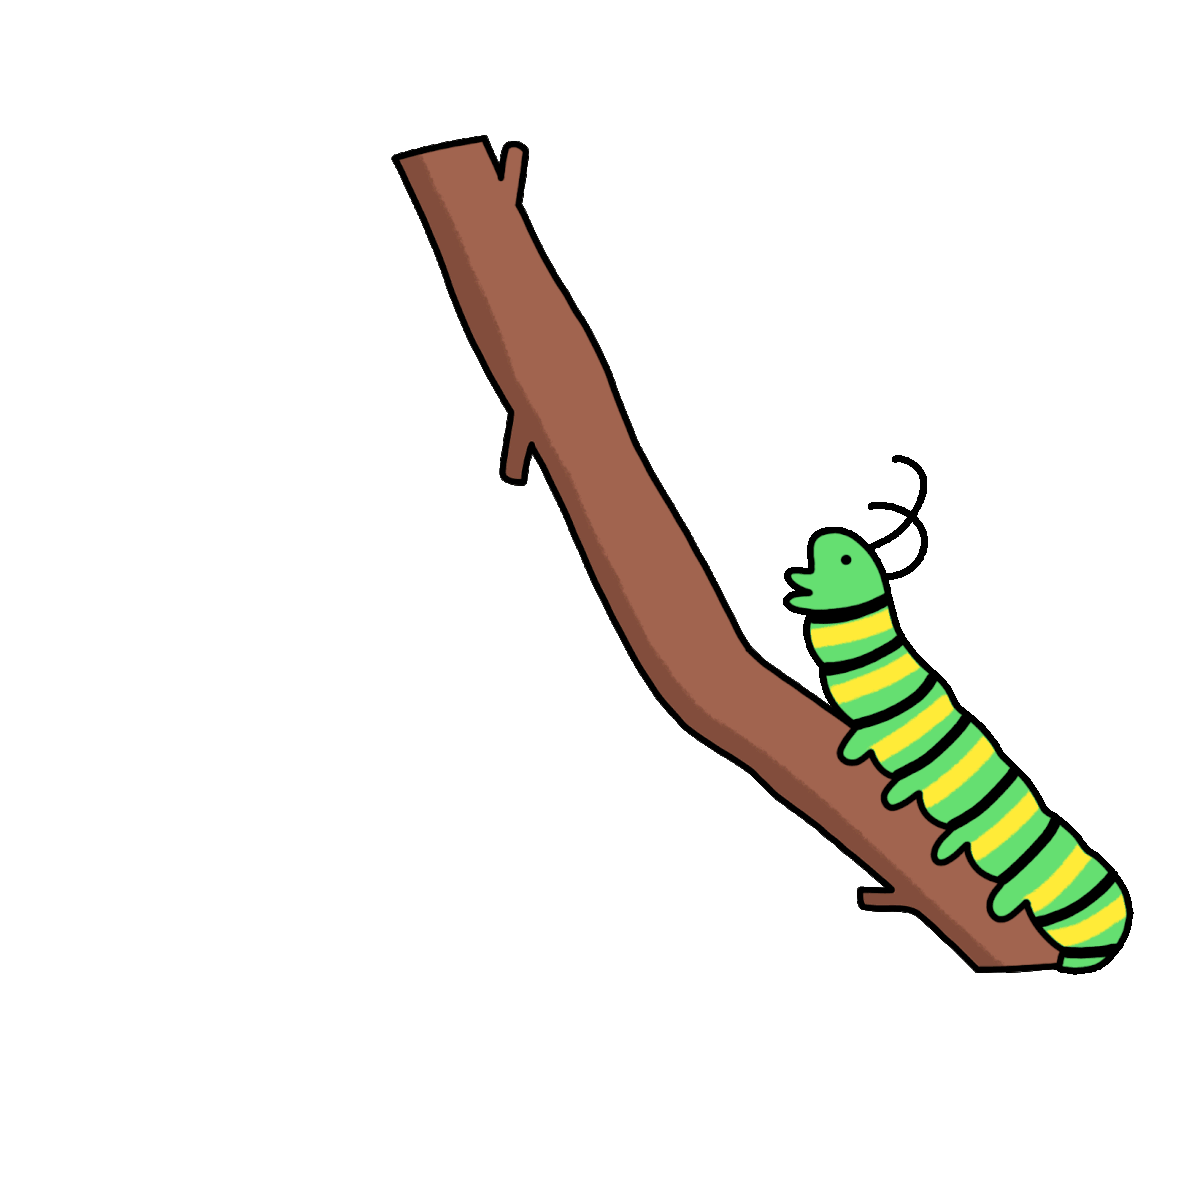 A gif of a caterpillar metamorphosing to a butterfly